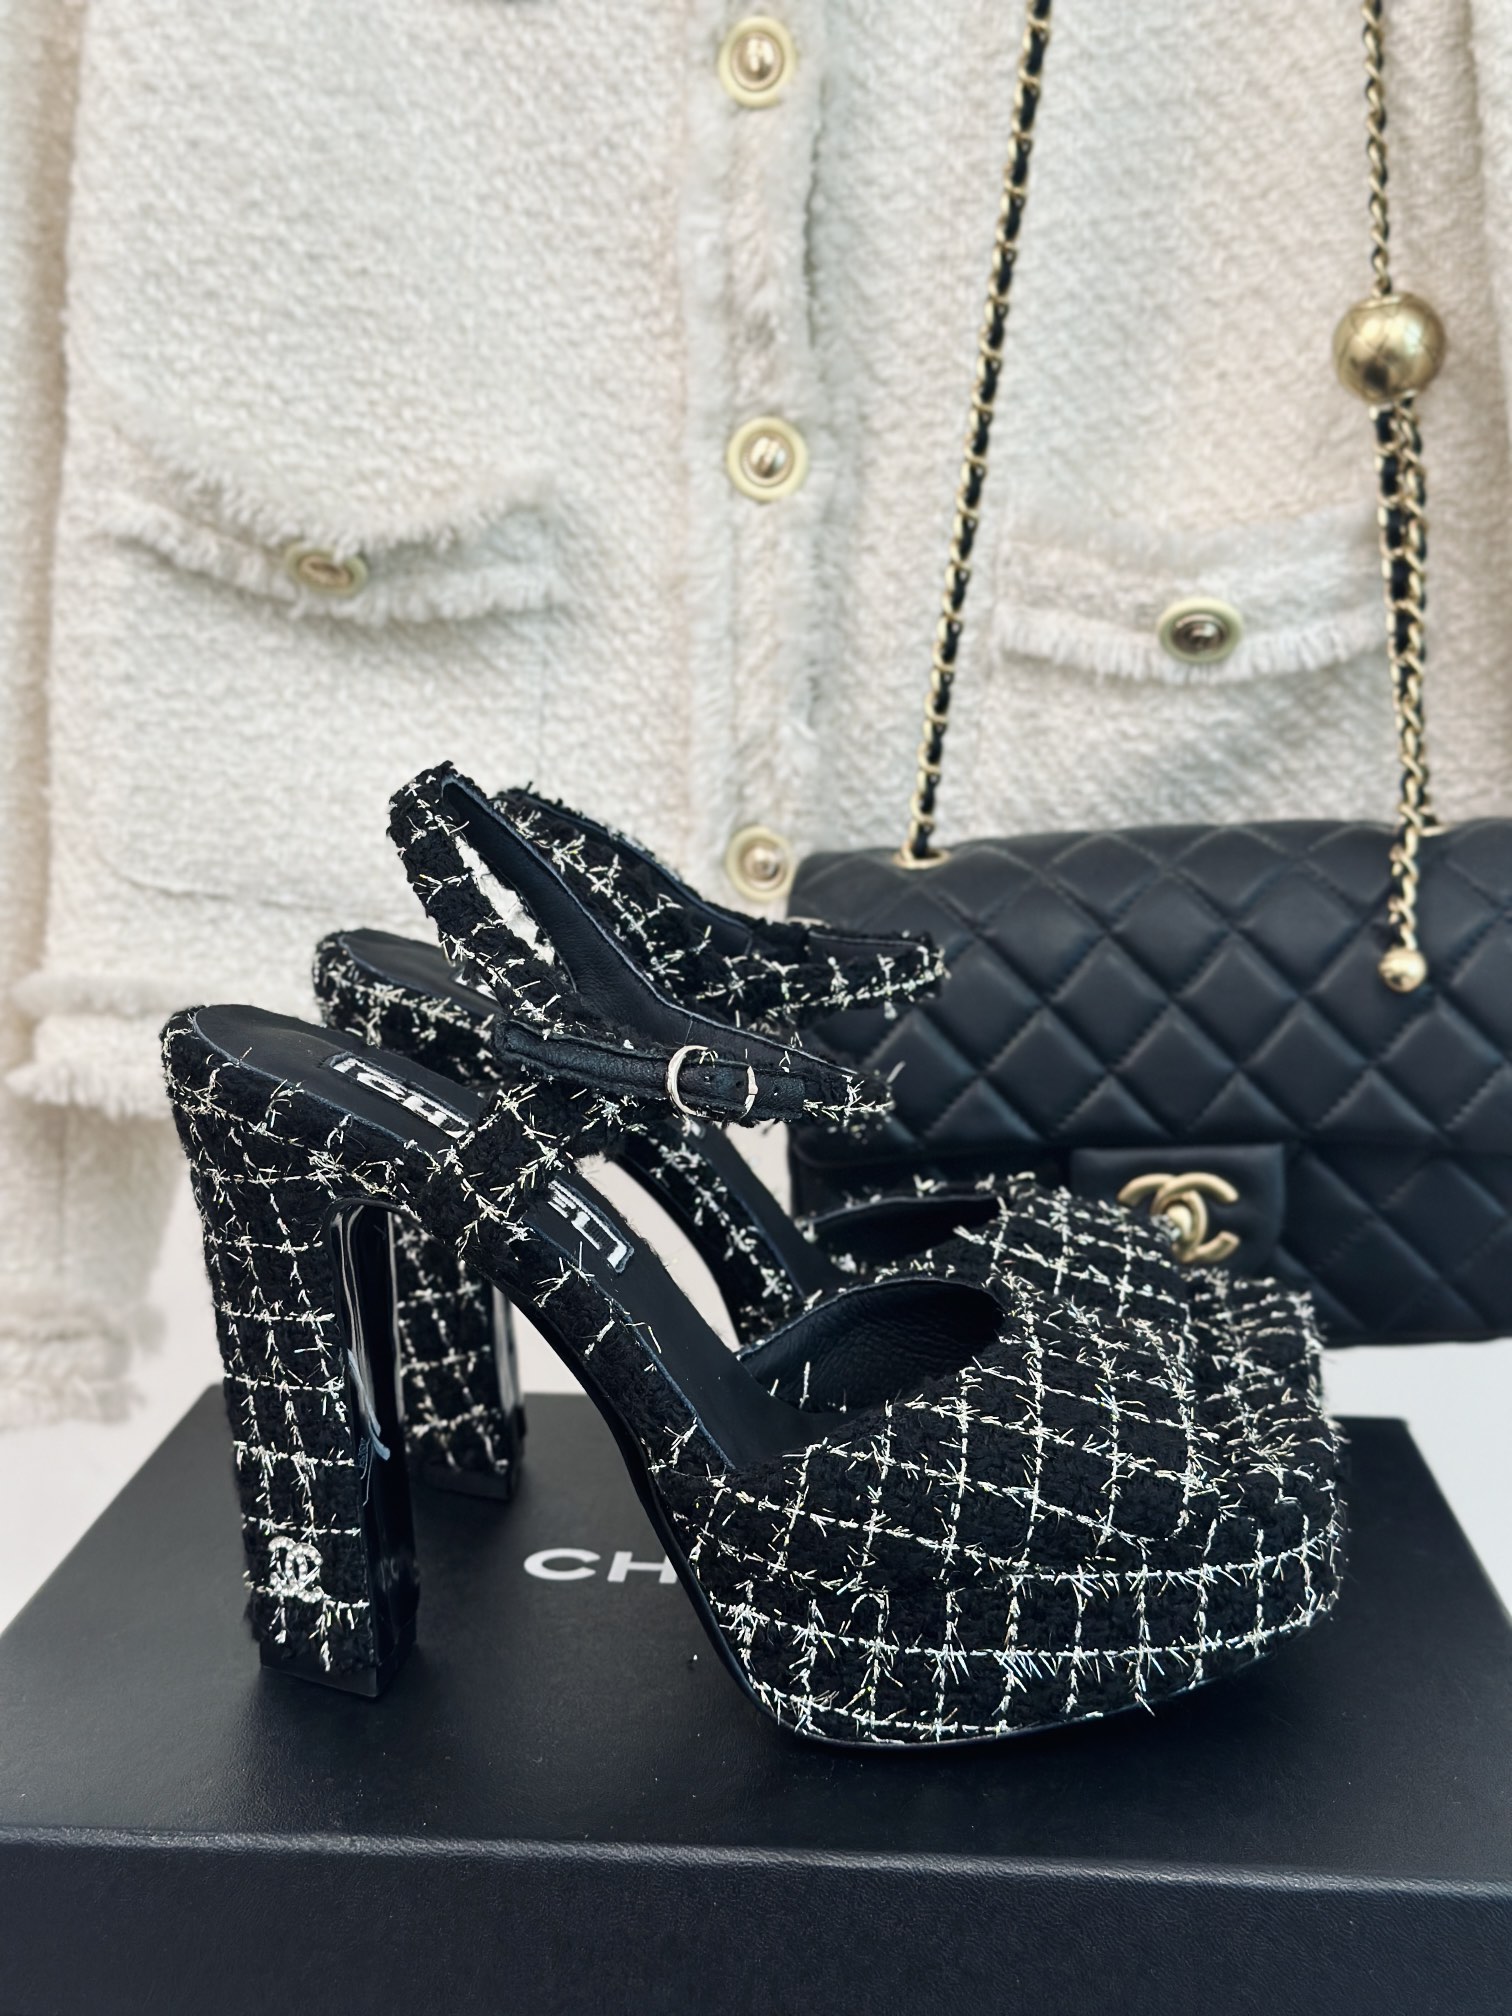 Chanel Buy Shoes High Heel Pumps Sandals Genuine Leather Sheepskin Silk